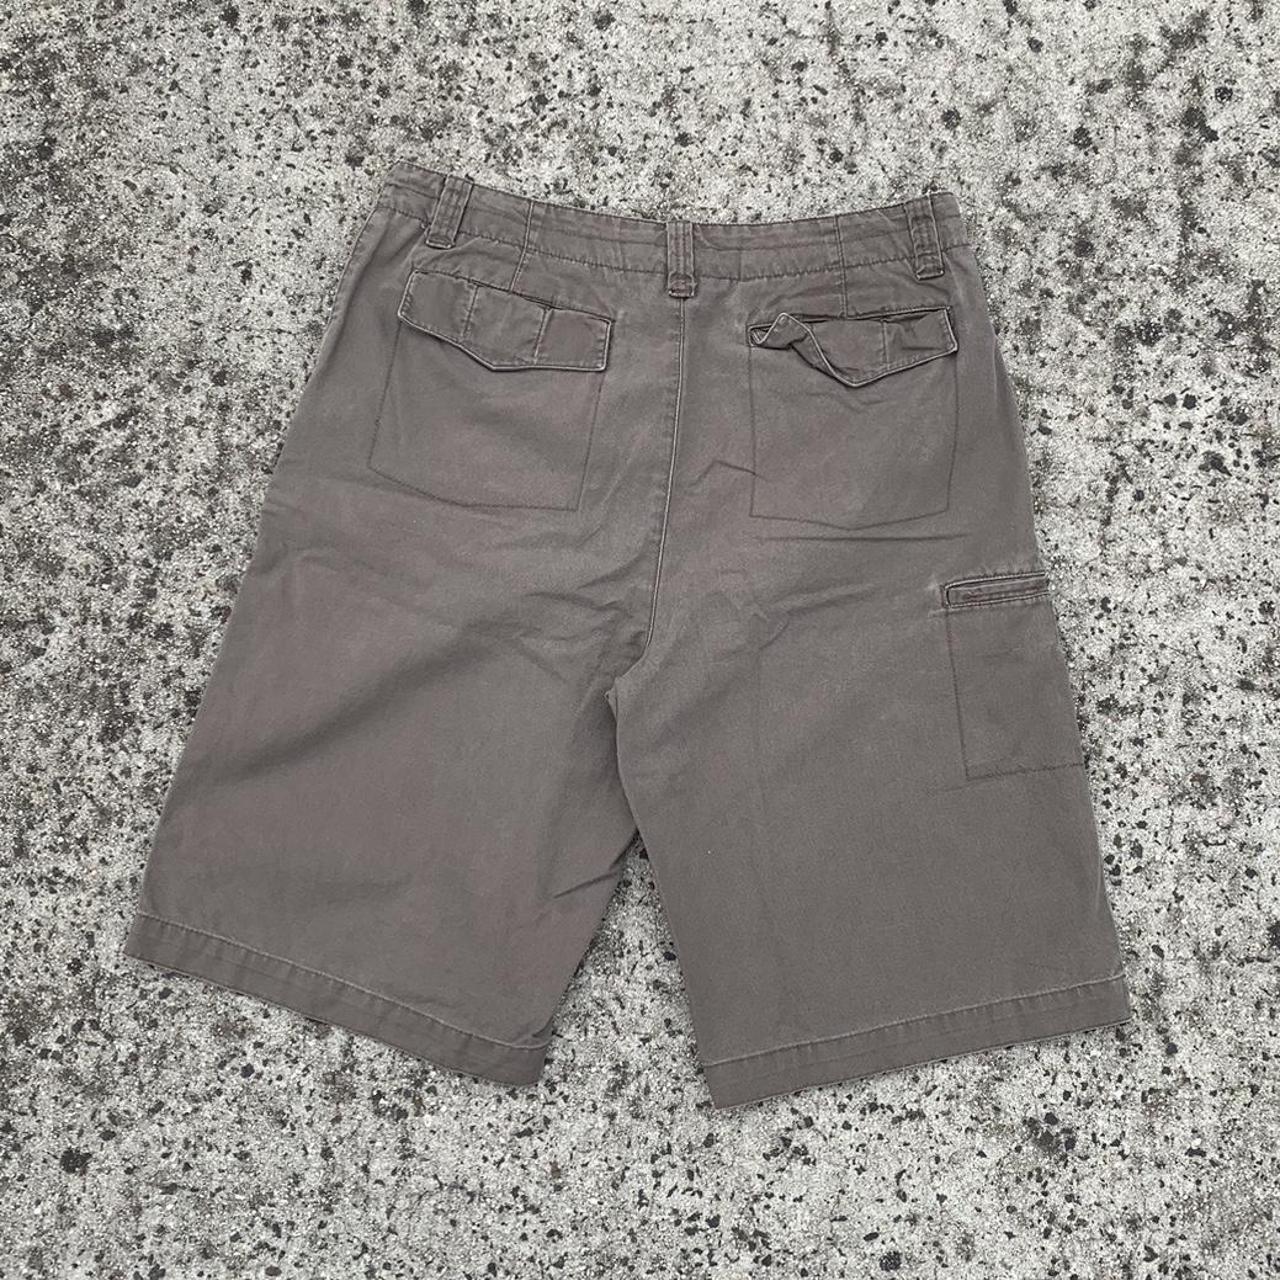 2000s oversized & baggy brown shorts/jorts - W34 -... - Depop